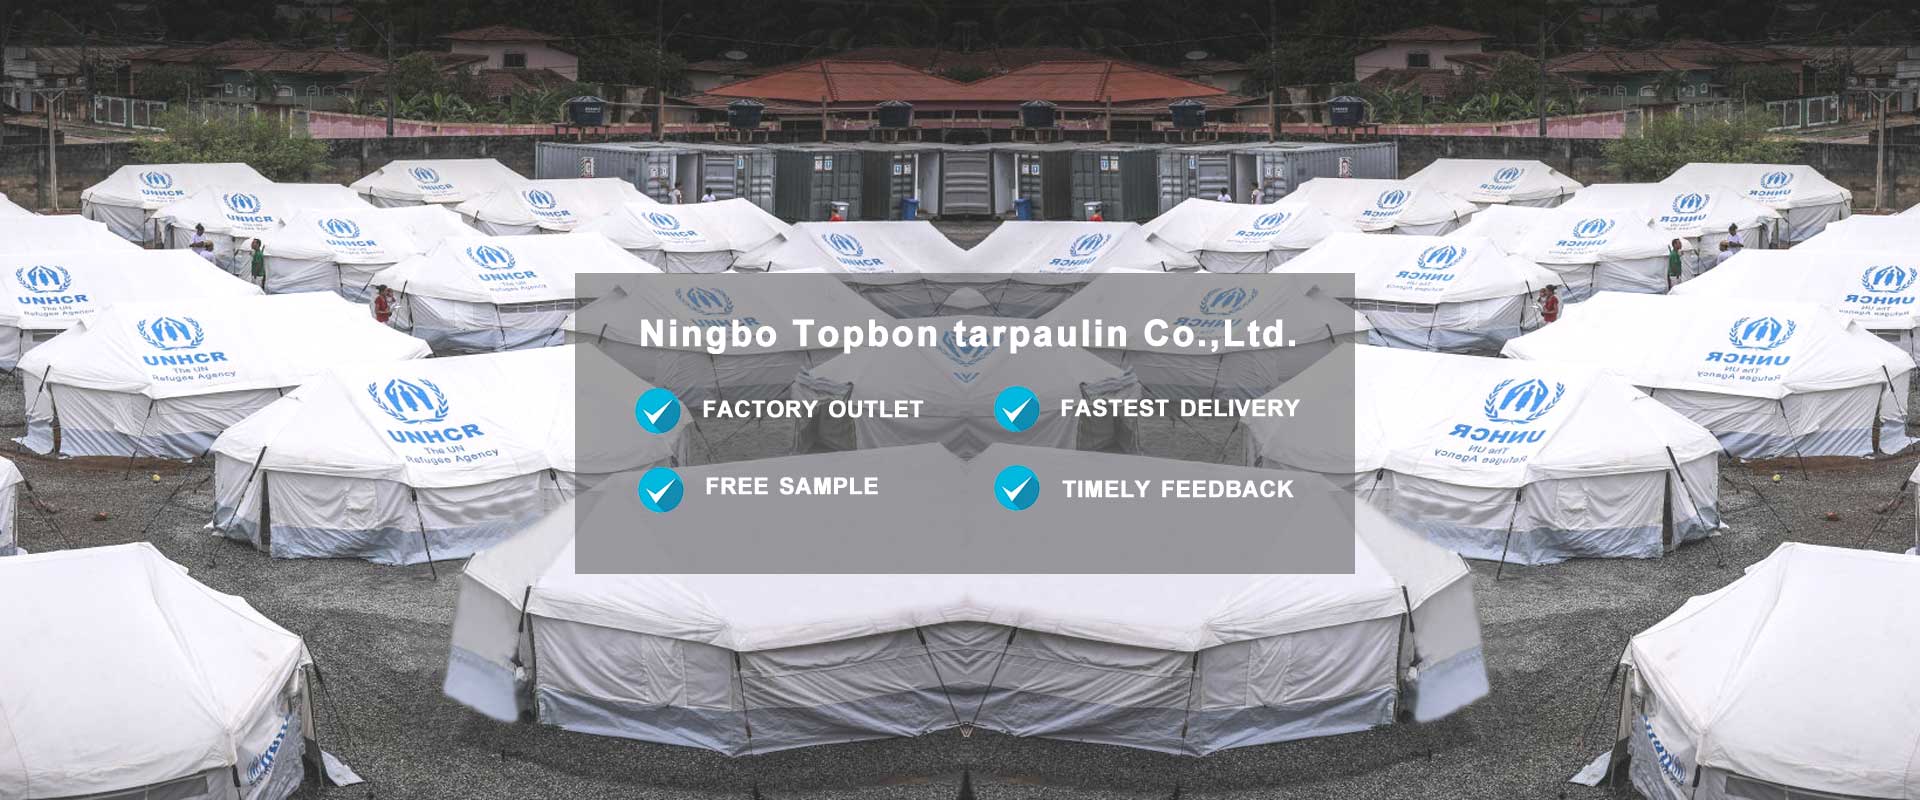 Ningbo Topbon tarpaulin Co.,Ltd.